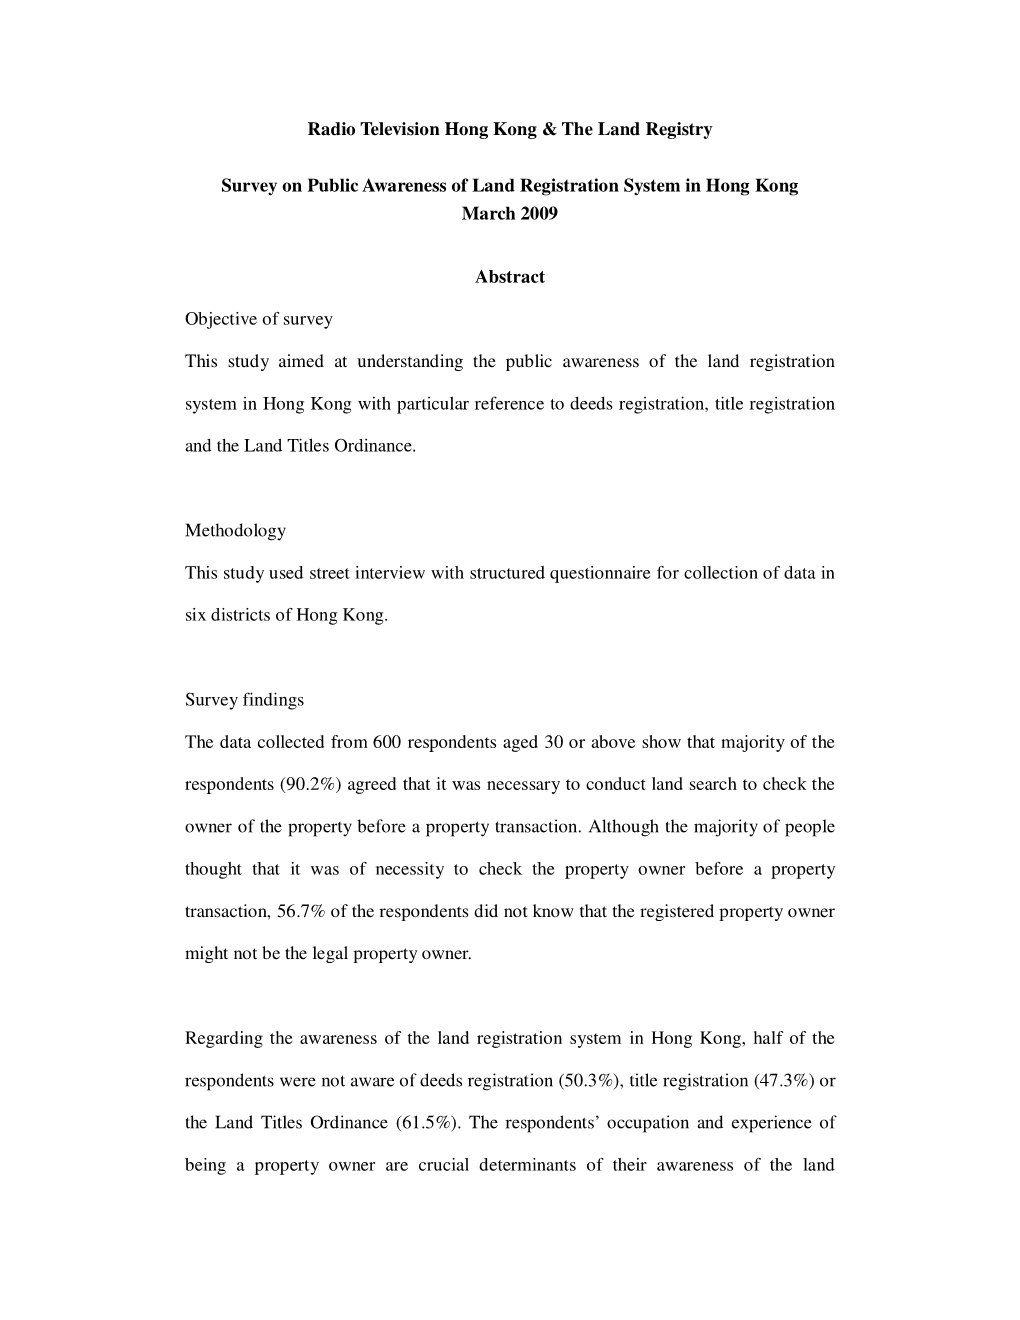 Radio Television Hong Kong & the Land Registry Survey on Public